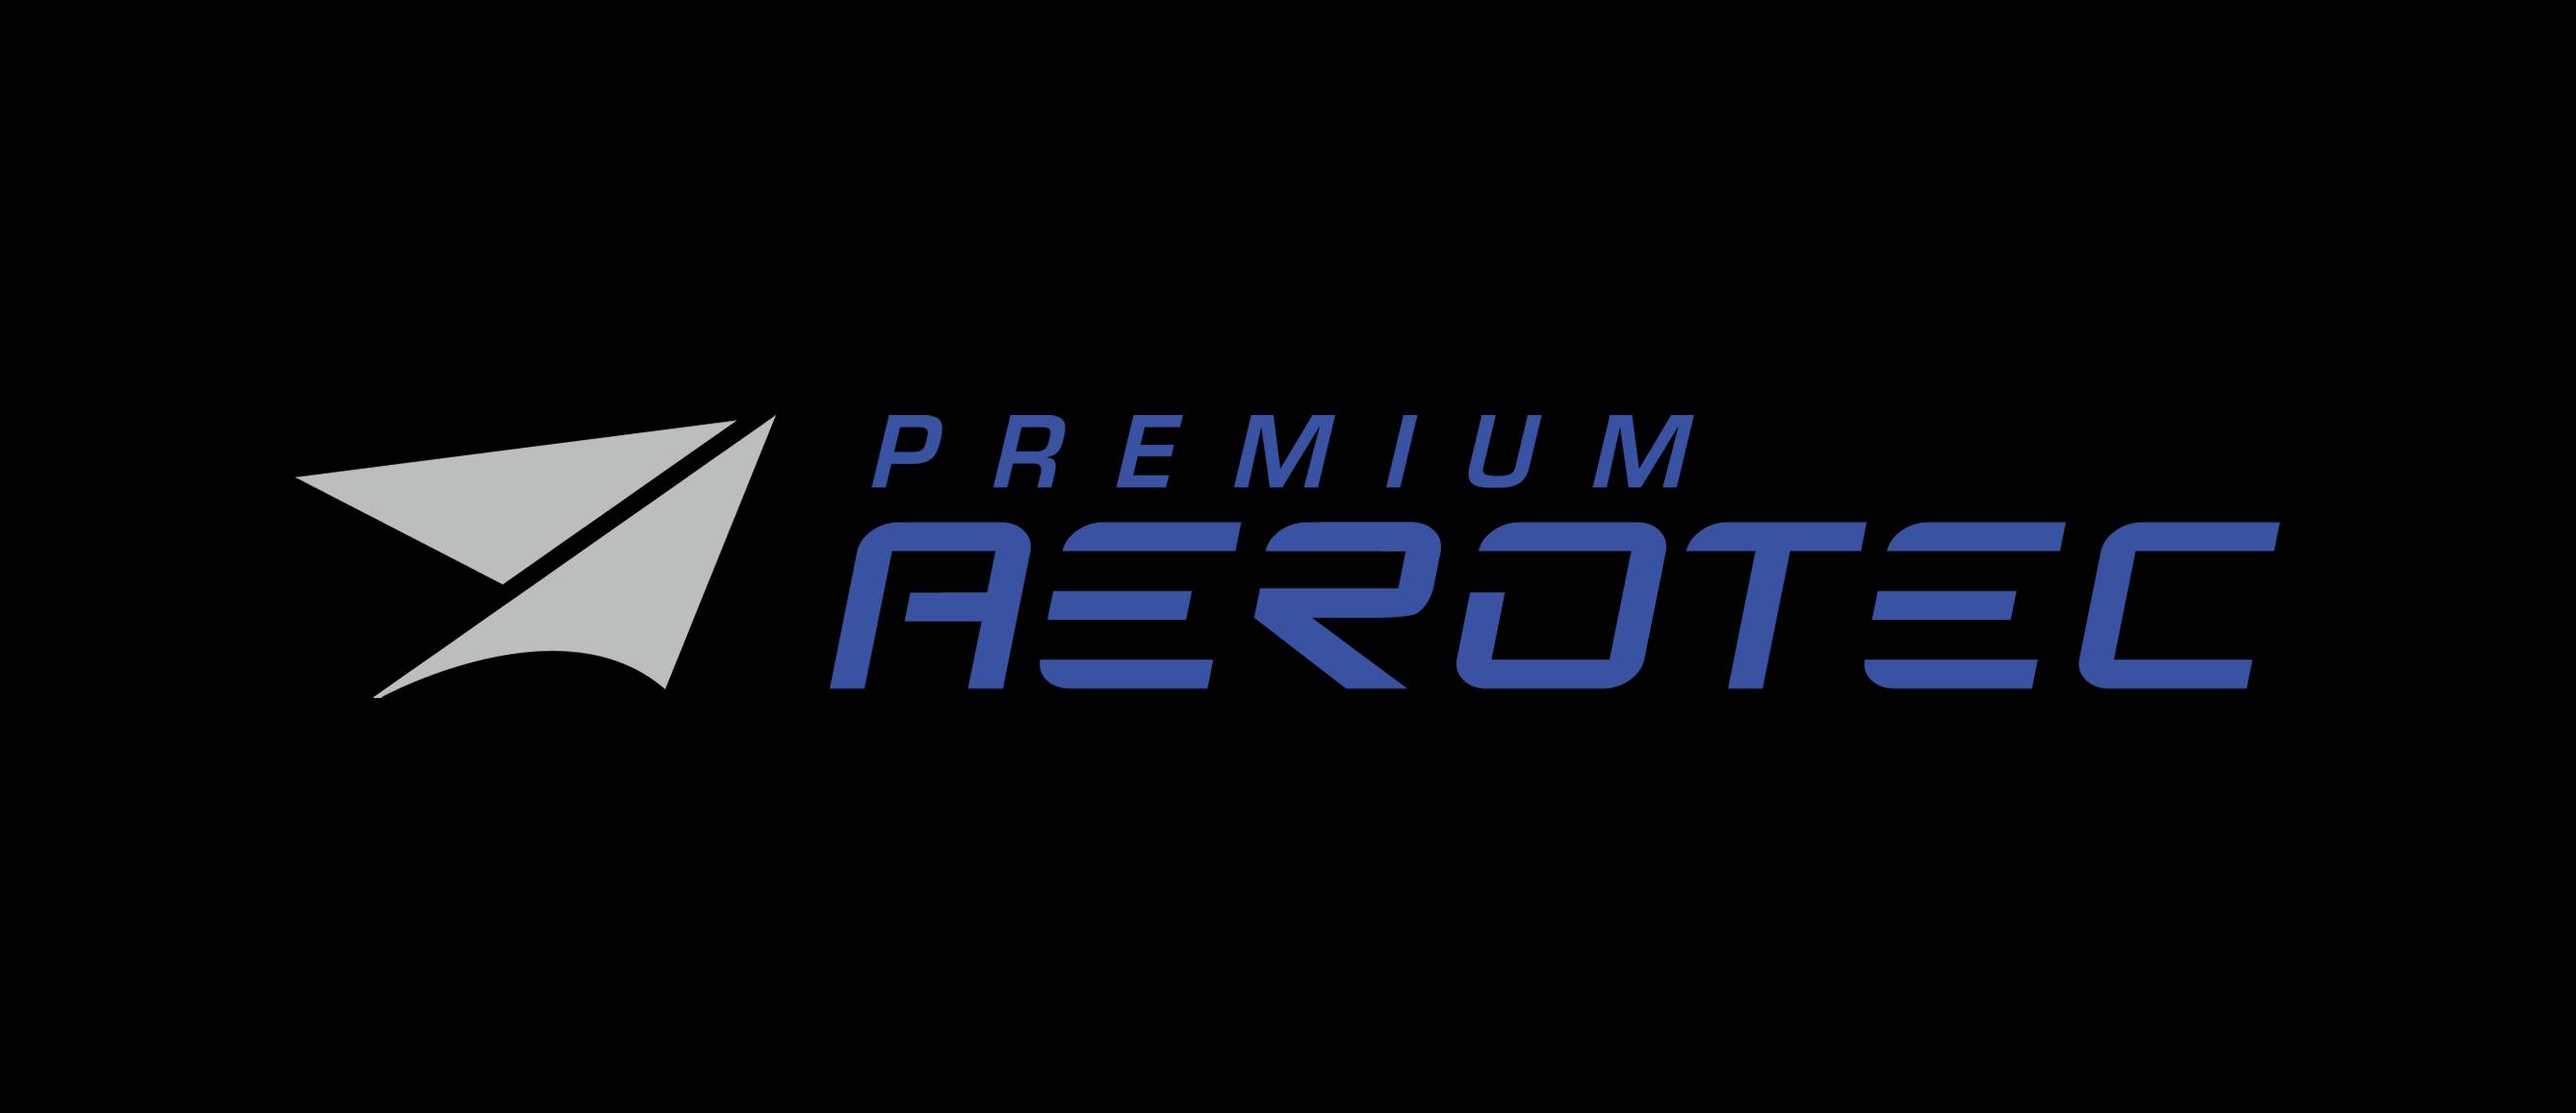 Logo Aerotec